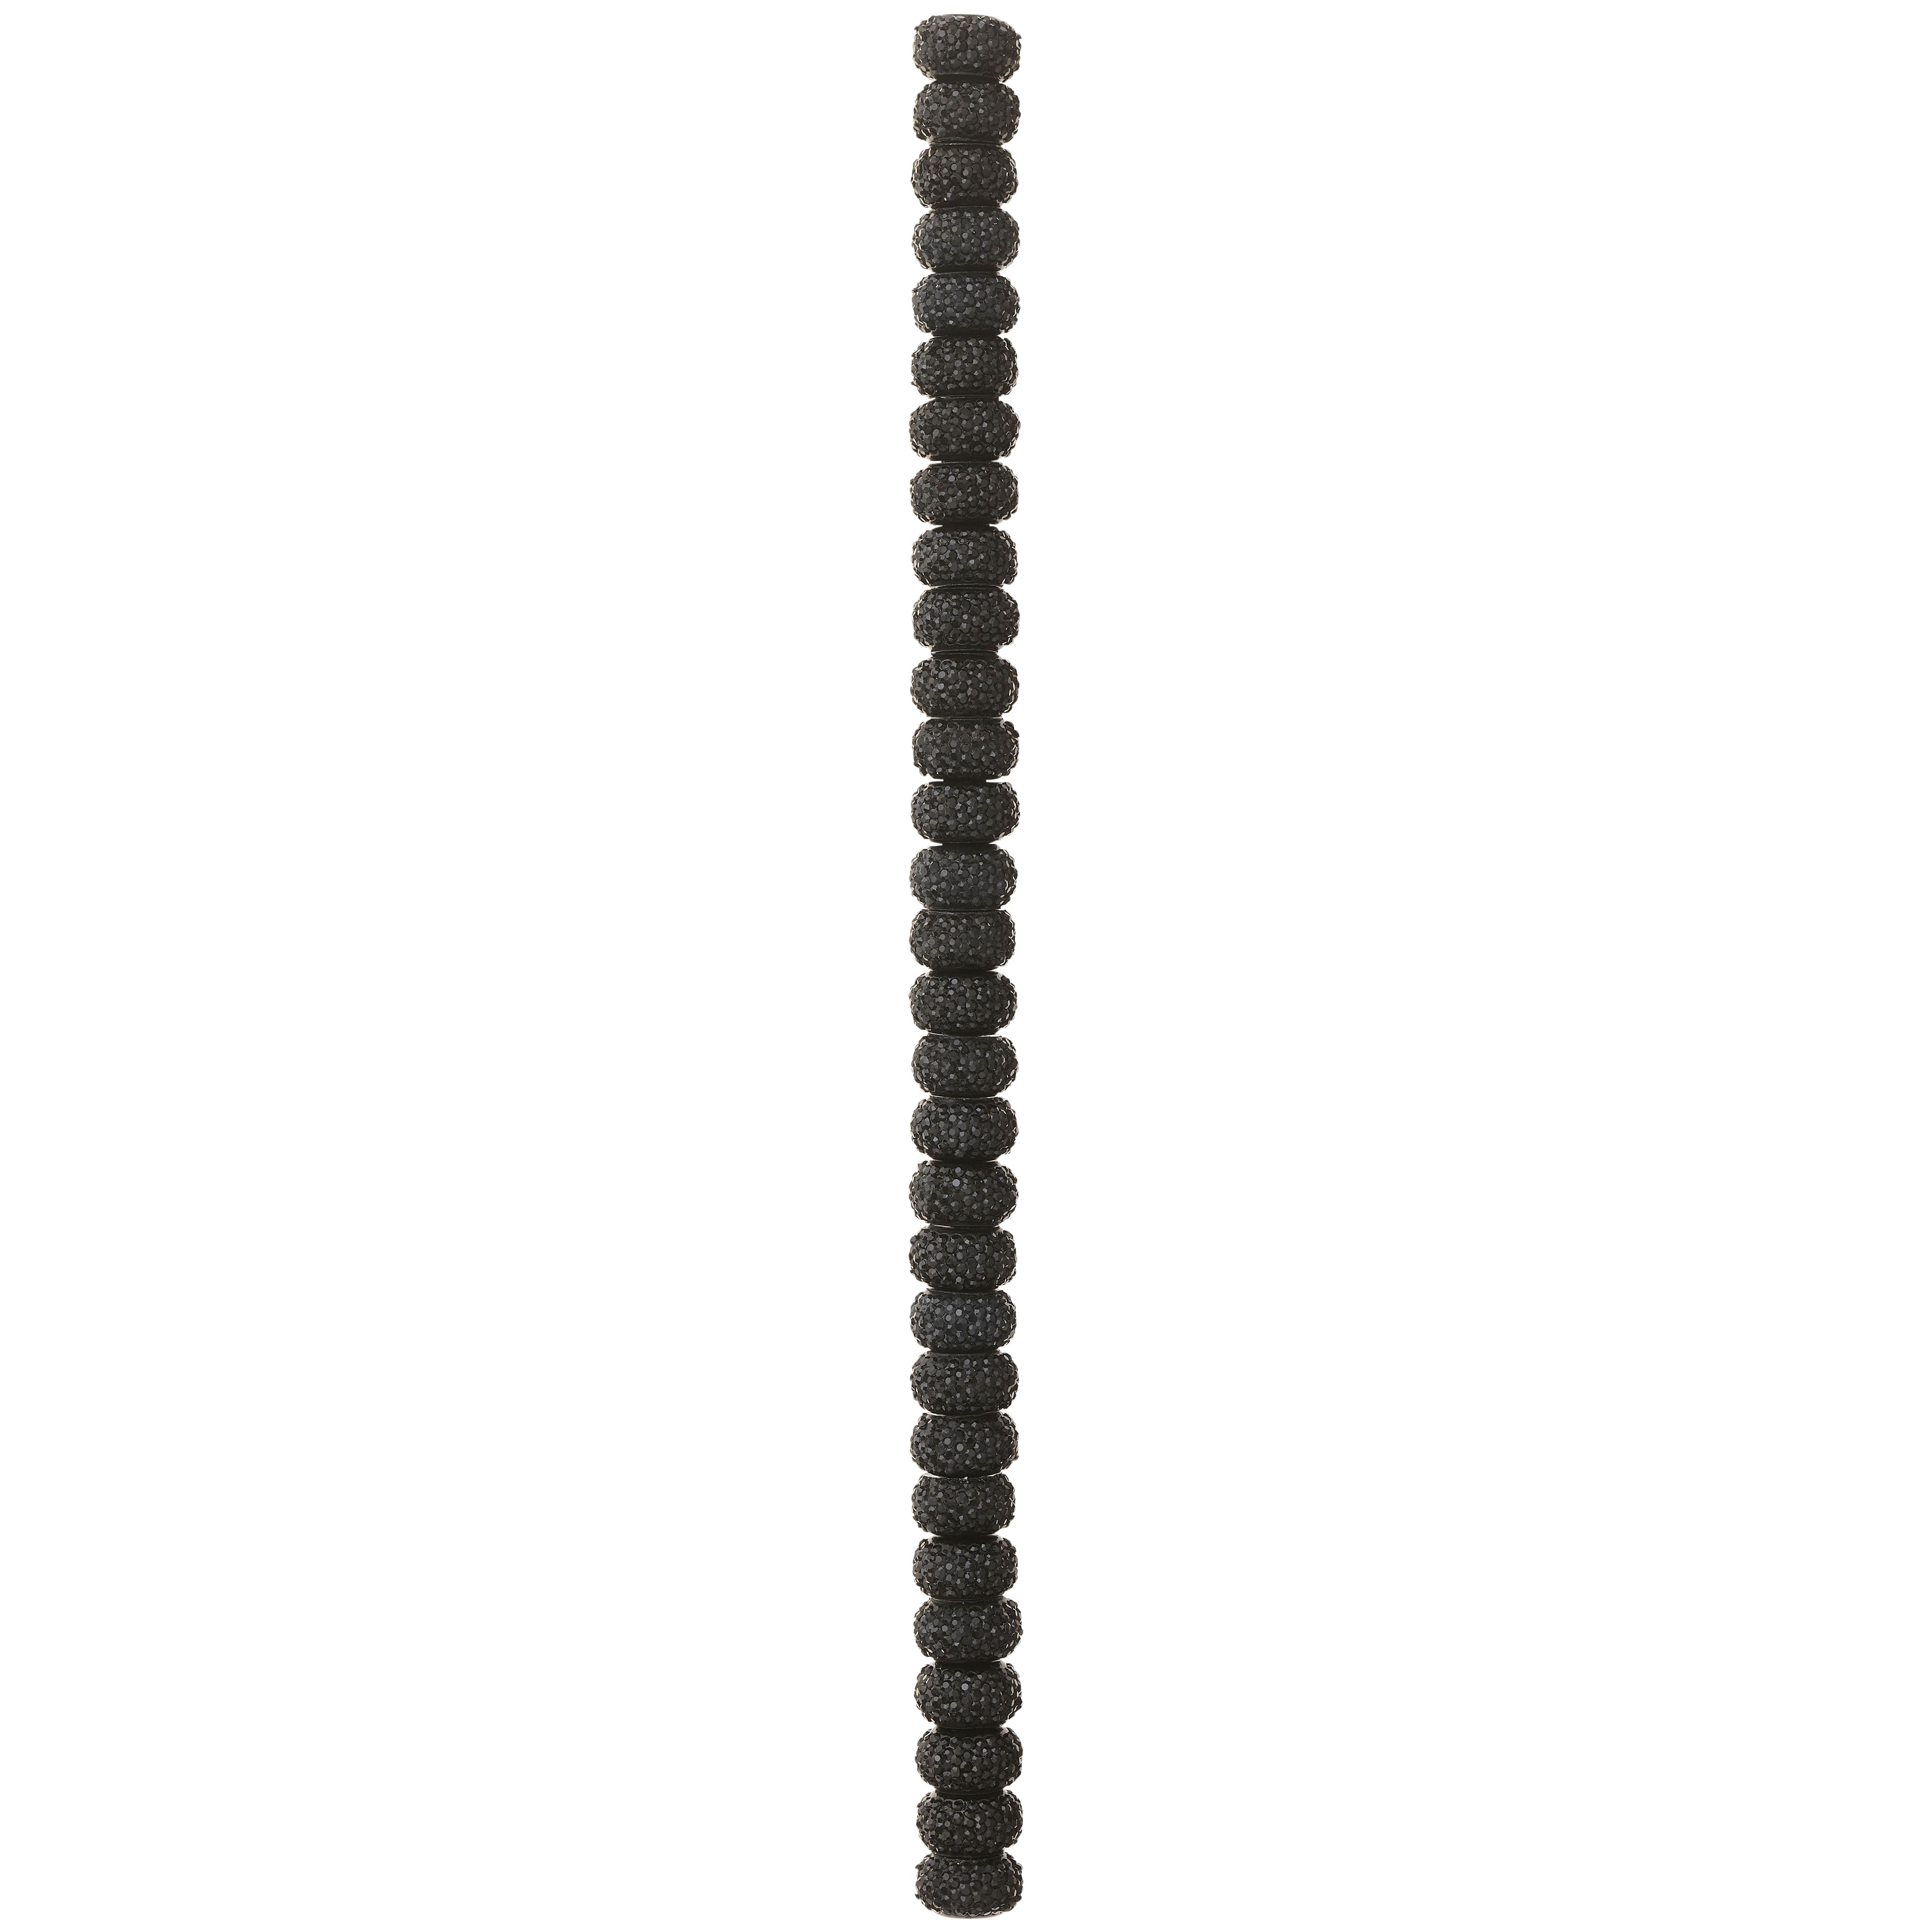 12 Packs: 30 ct. (360 total) Black Resin Rondelle Beads, 10mm by Bead Landing&#x2122;